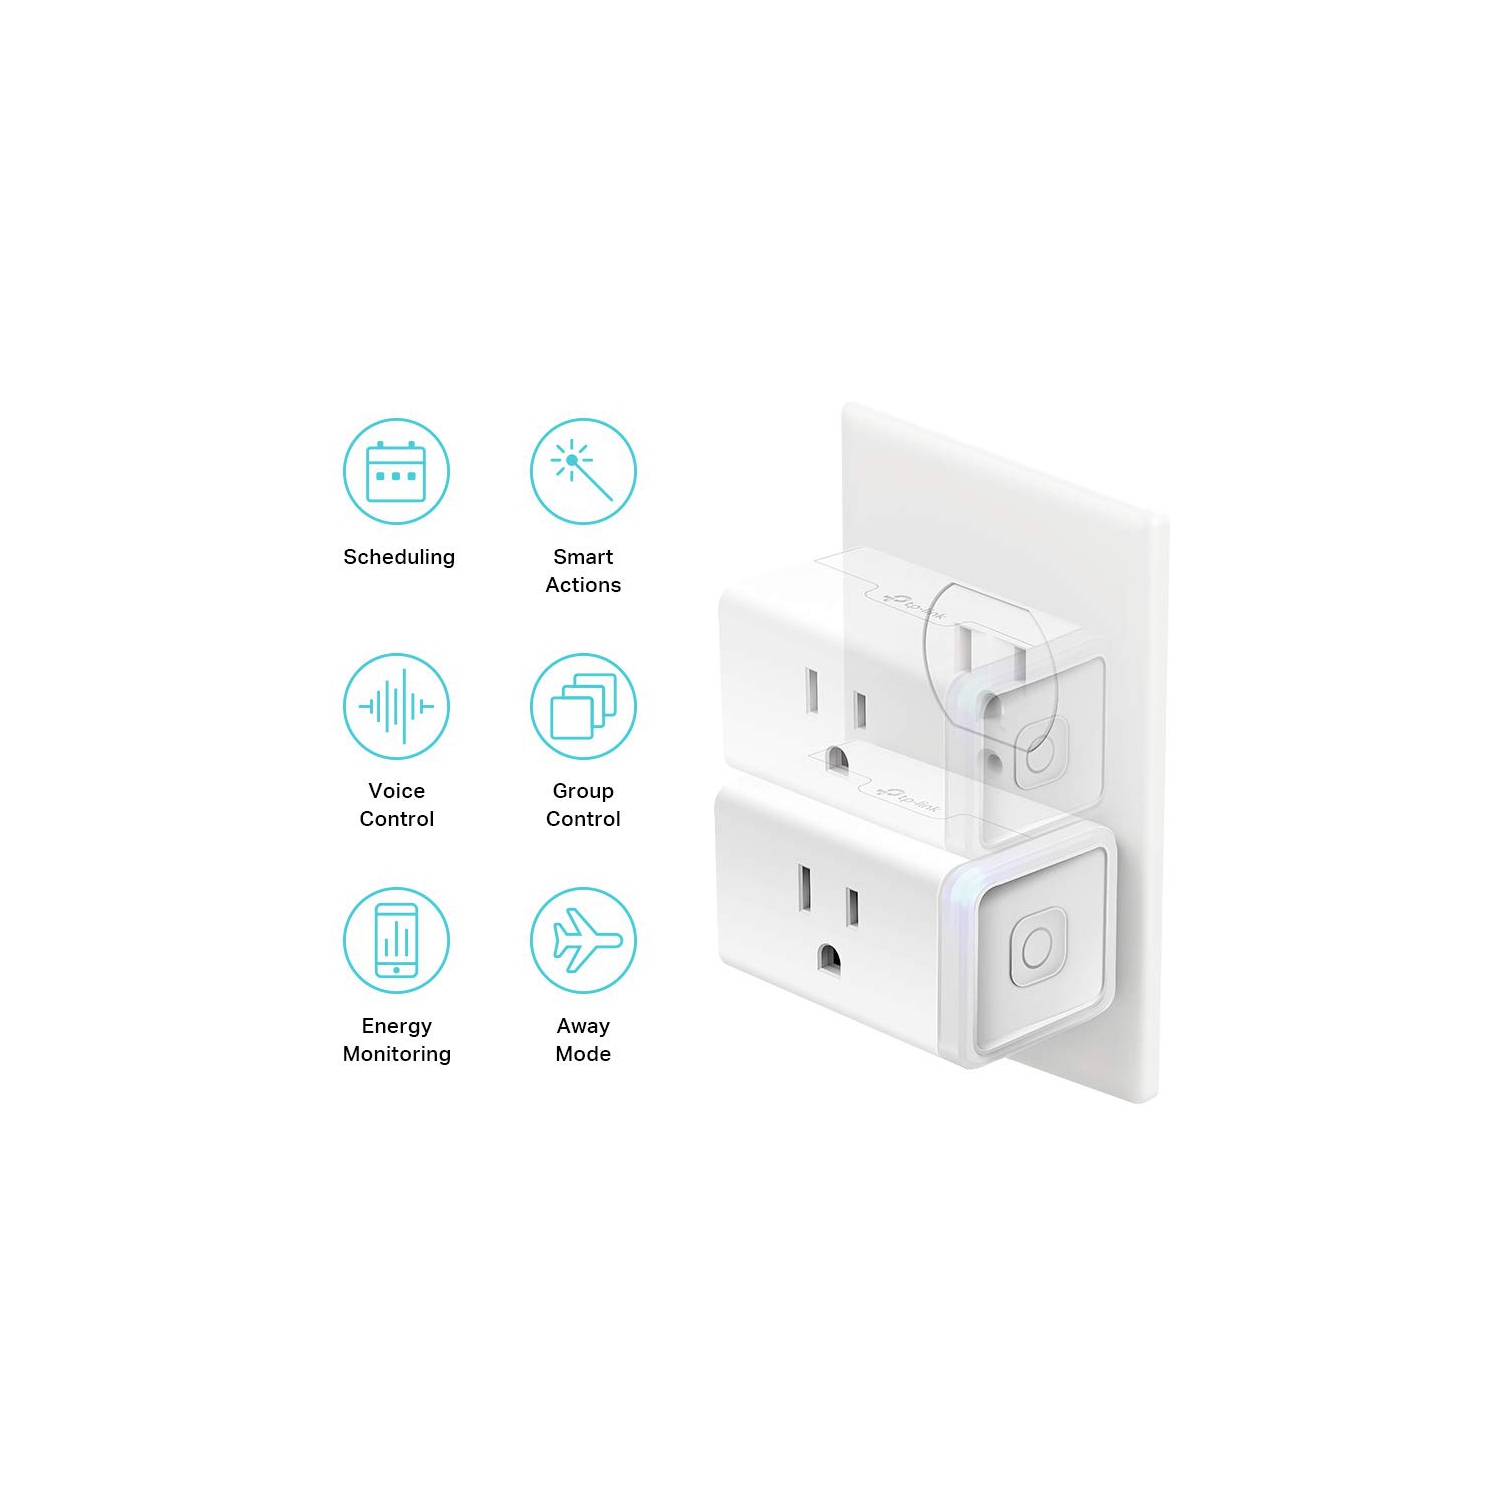 How To Connect Kasa Smart Plug To Alexa? - Nerd Plus Art